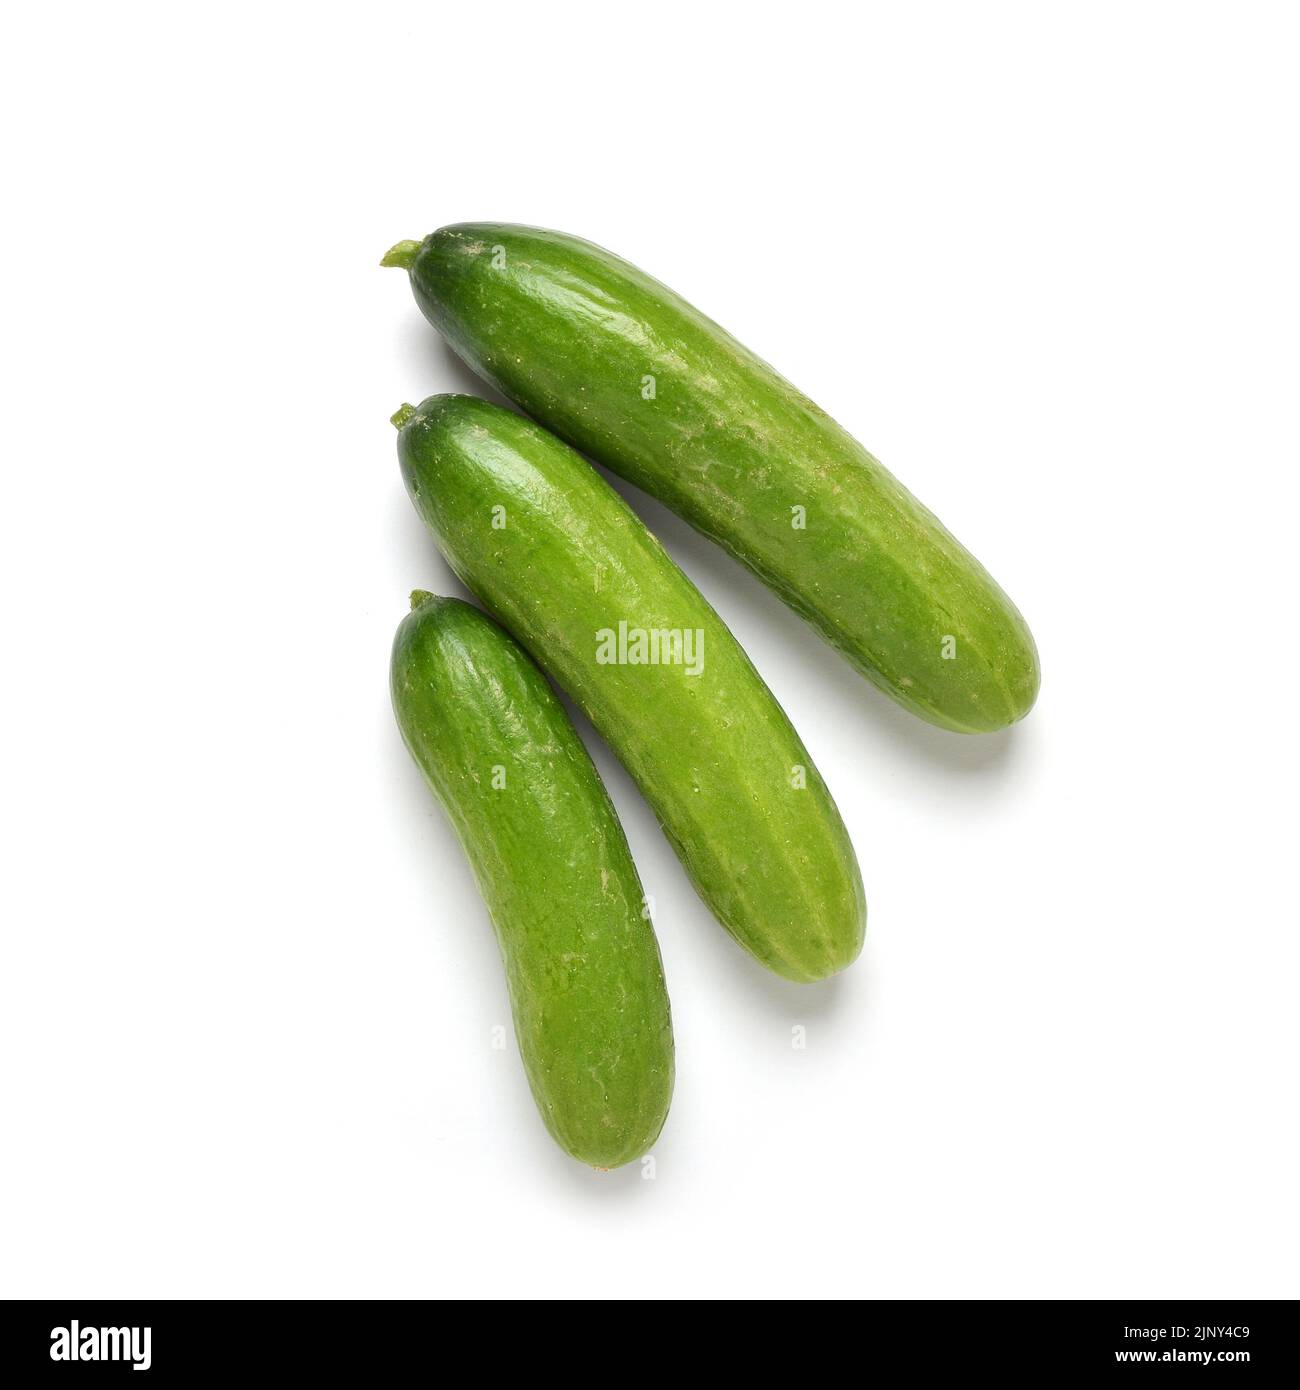 https://c8.alamy.com/comp/2JNY4C9/bite-size-cucumbers-from-above-isolated-on-white-2JNY4C9.jpg